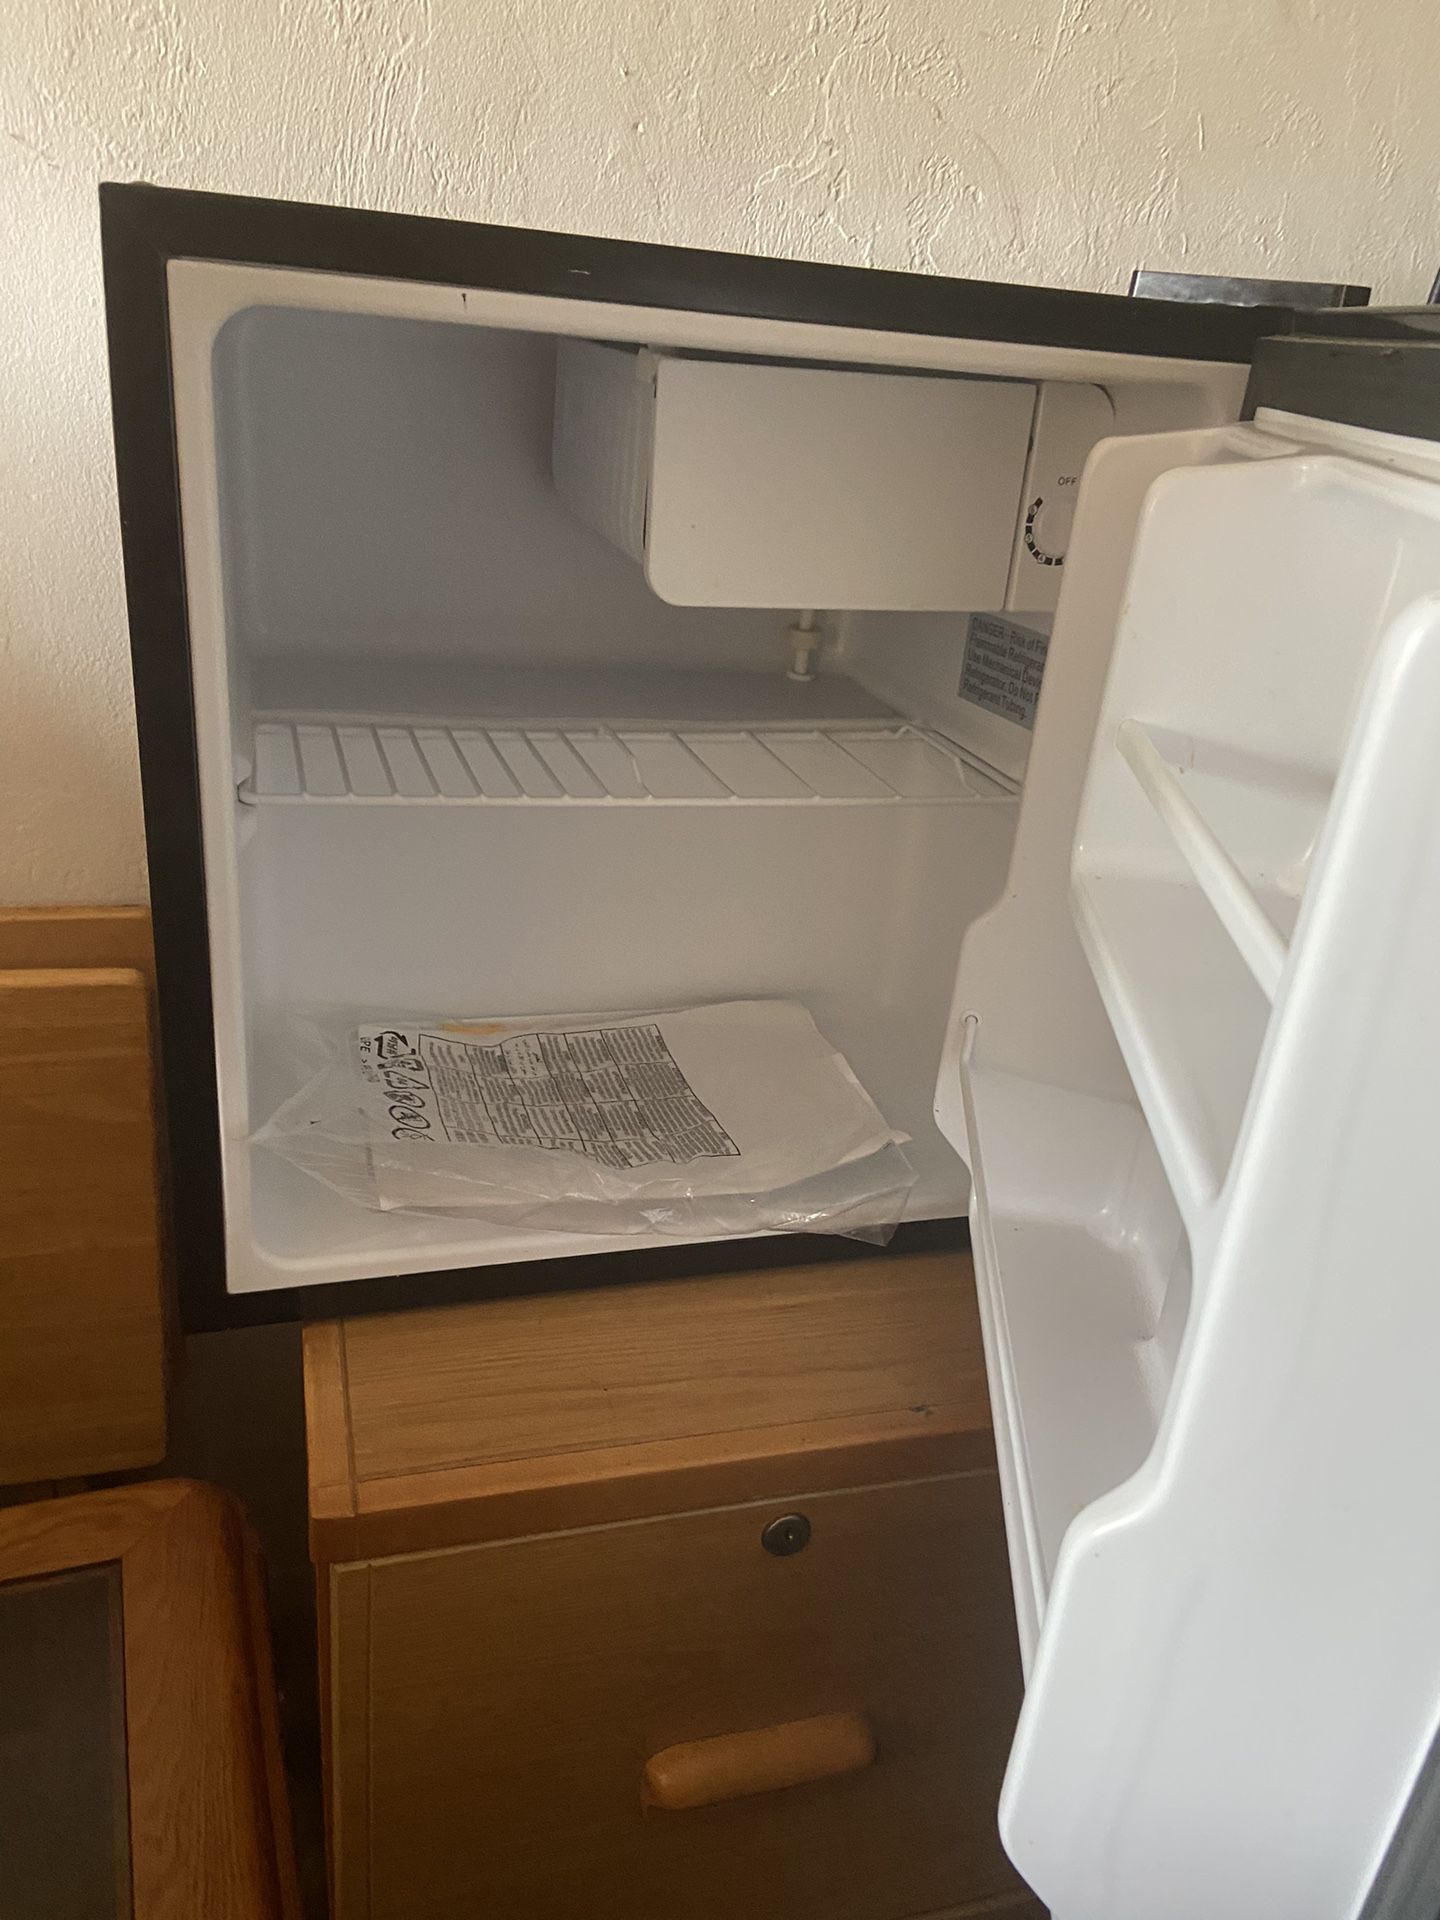 Media Mini fridge W/freezer